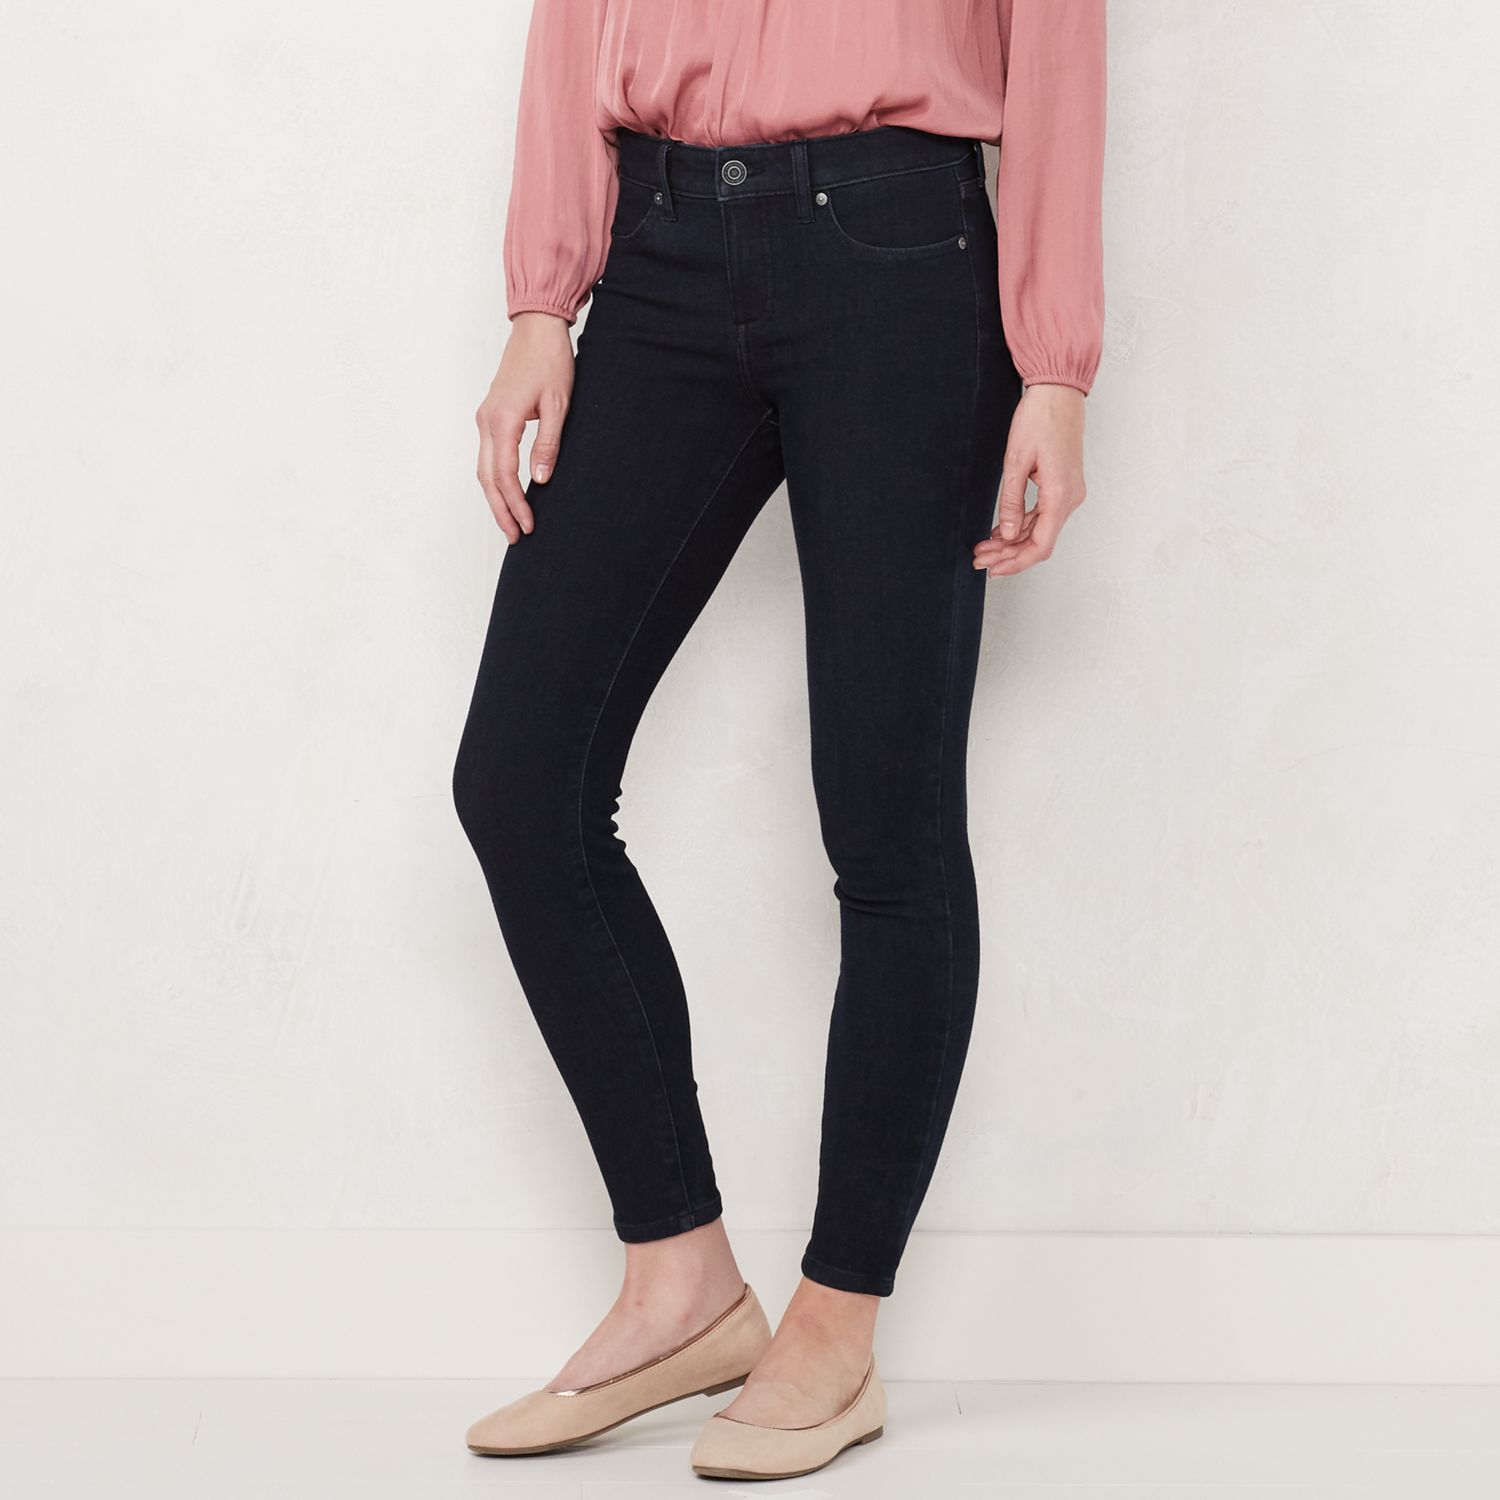 Image for LC Lauren Conrad Women's Feel Good Mid-Rise Super Skinny Jeans at Kohl's.